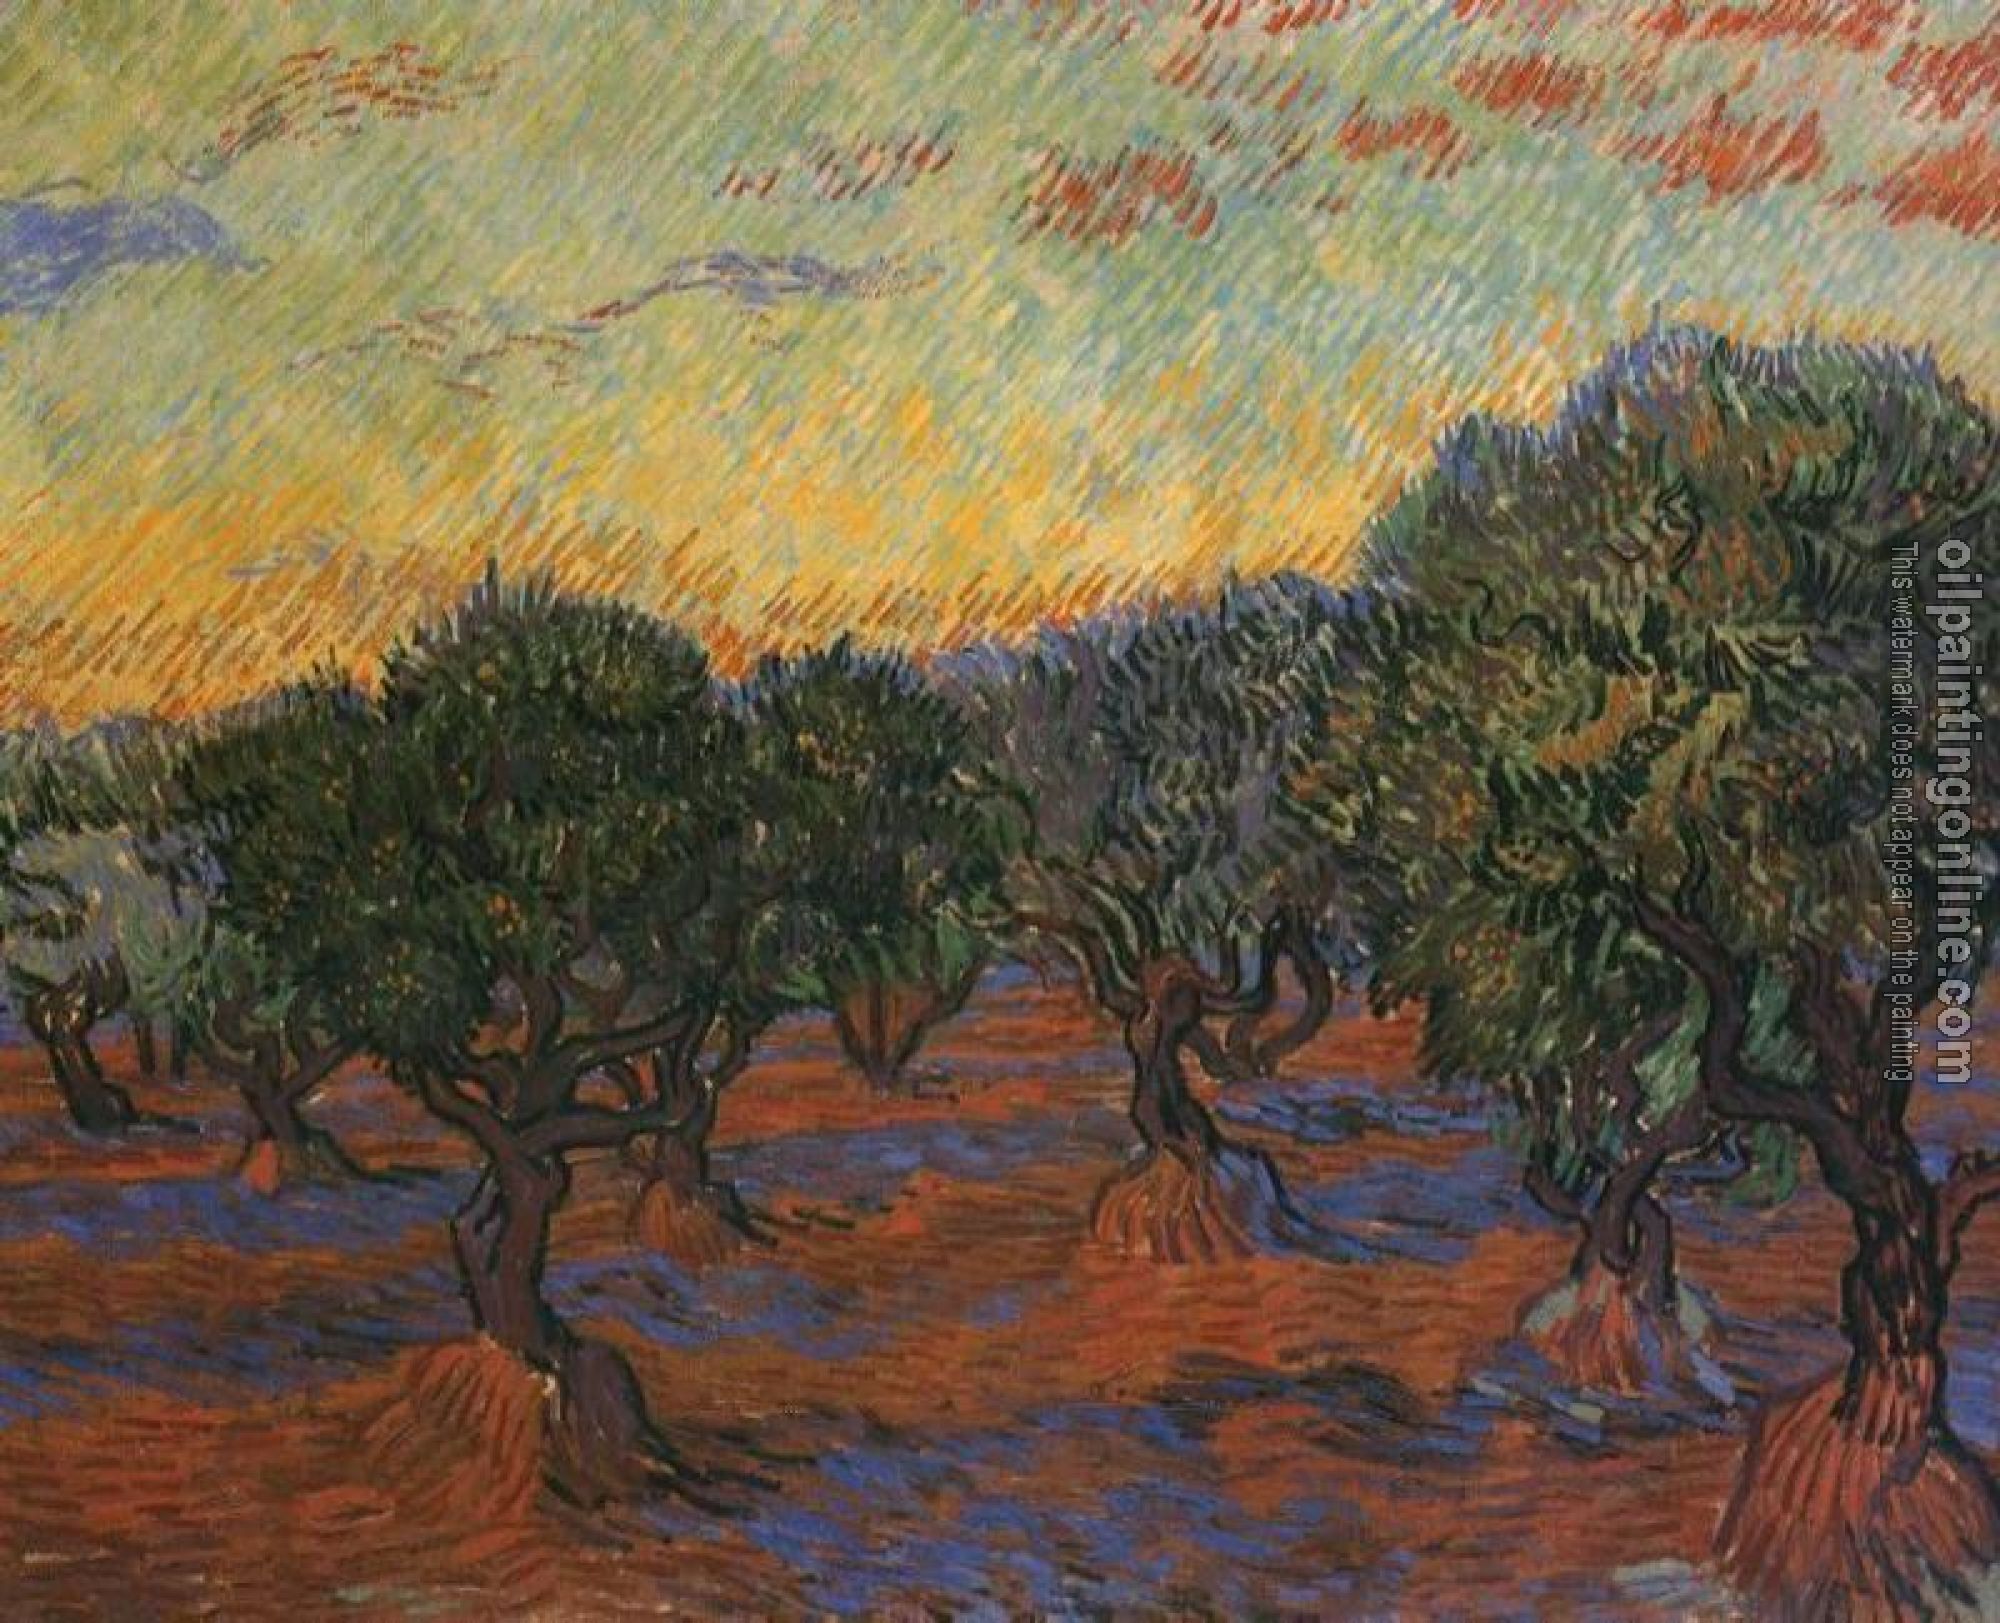 Gogh, Vincent van - Olive Grove, Orange Sky